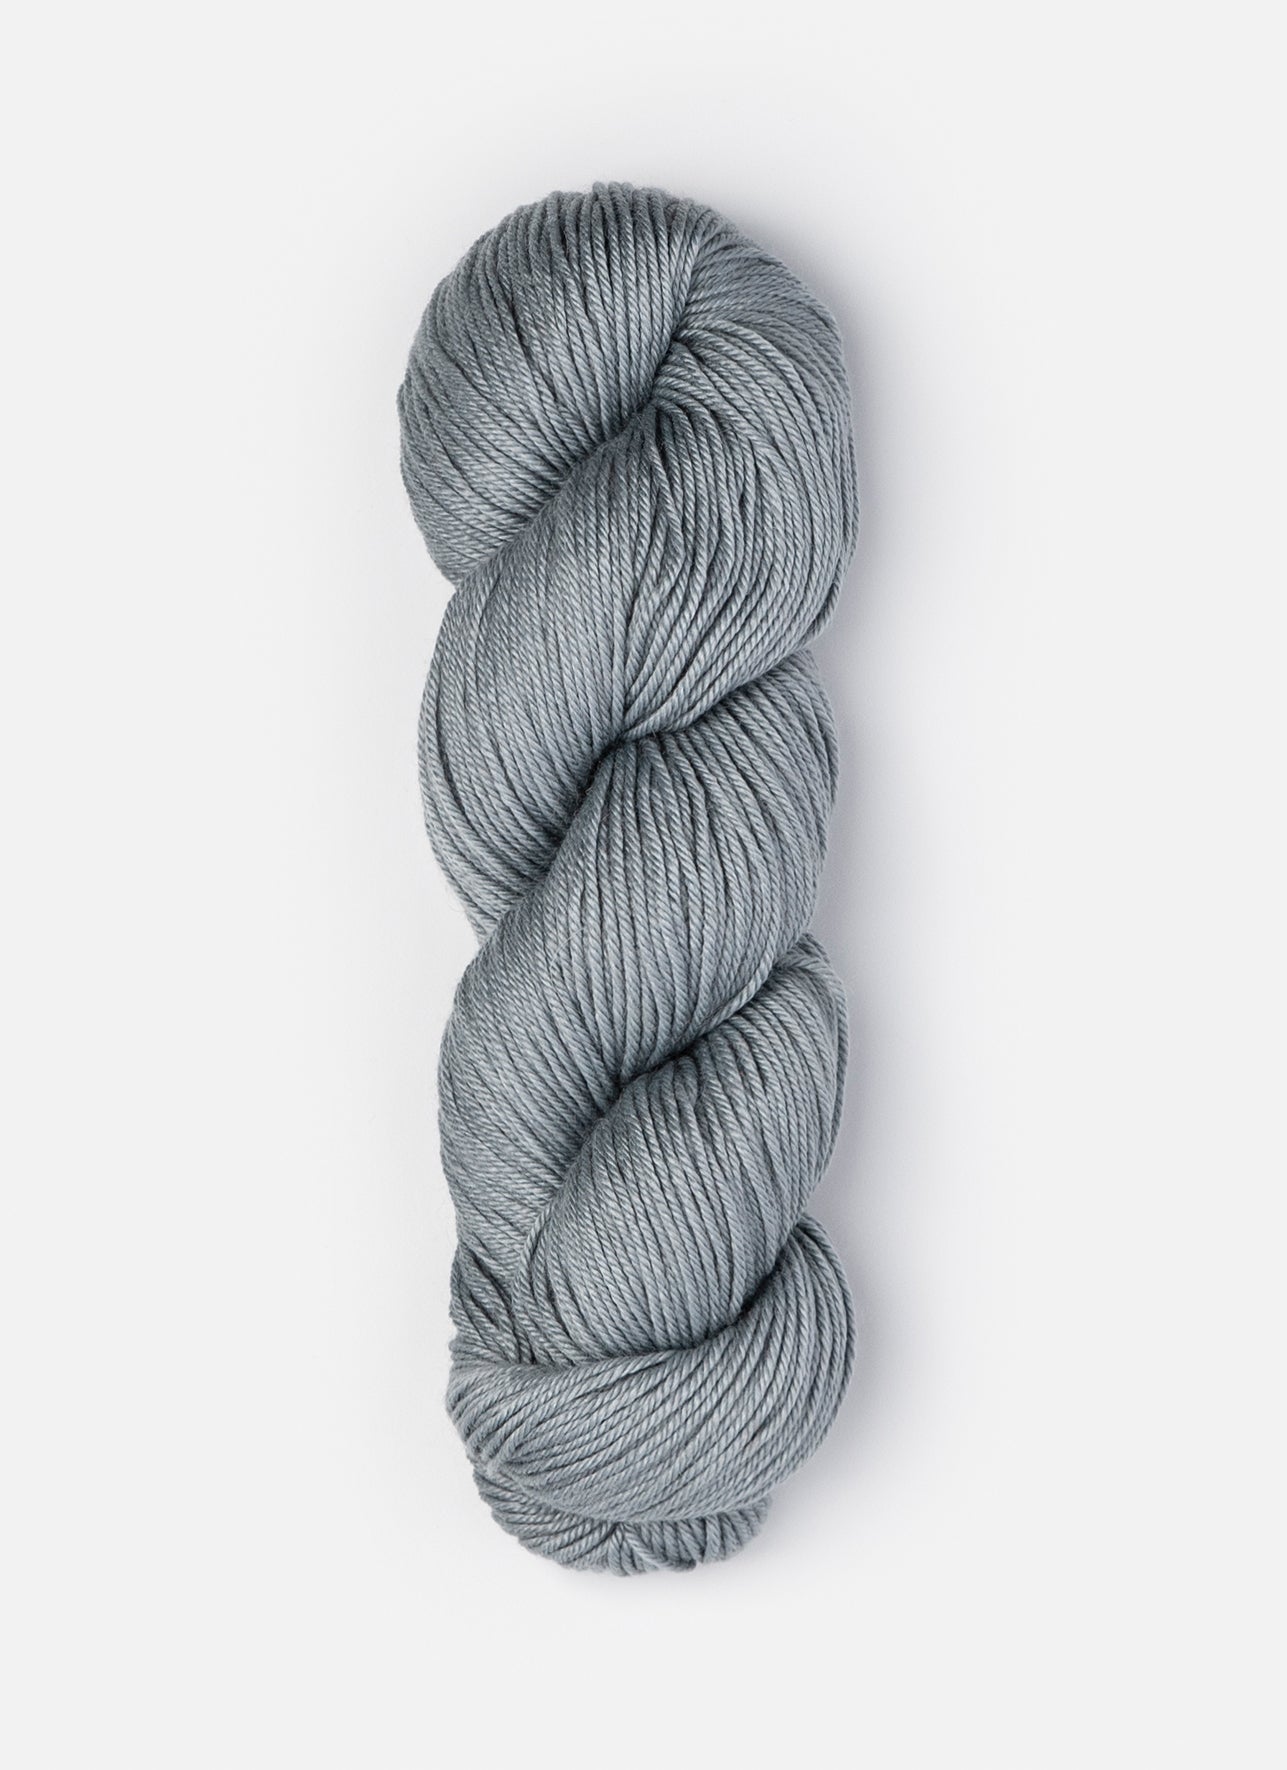 Knit Along - Blue Sky Fibers - Pacific Grove Top  (Medium Size)